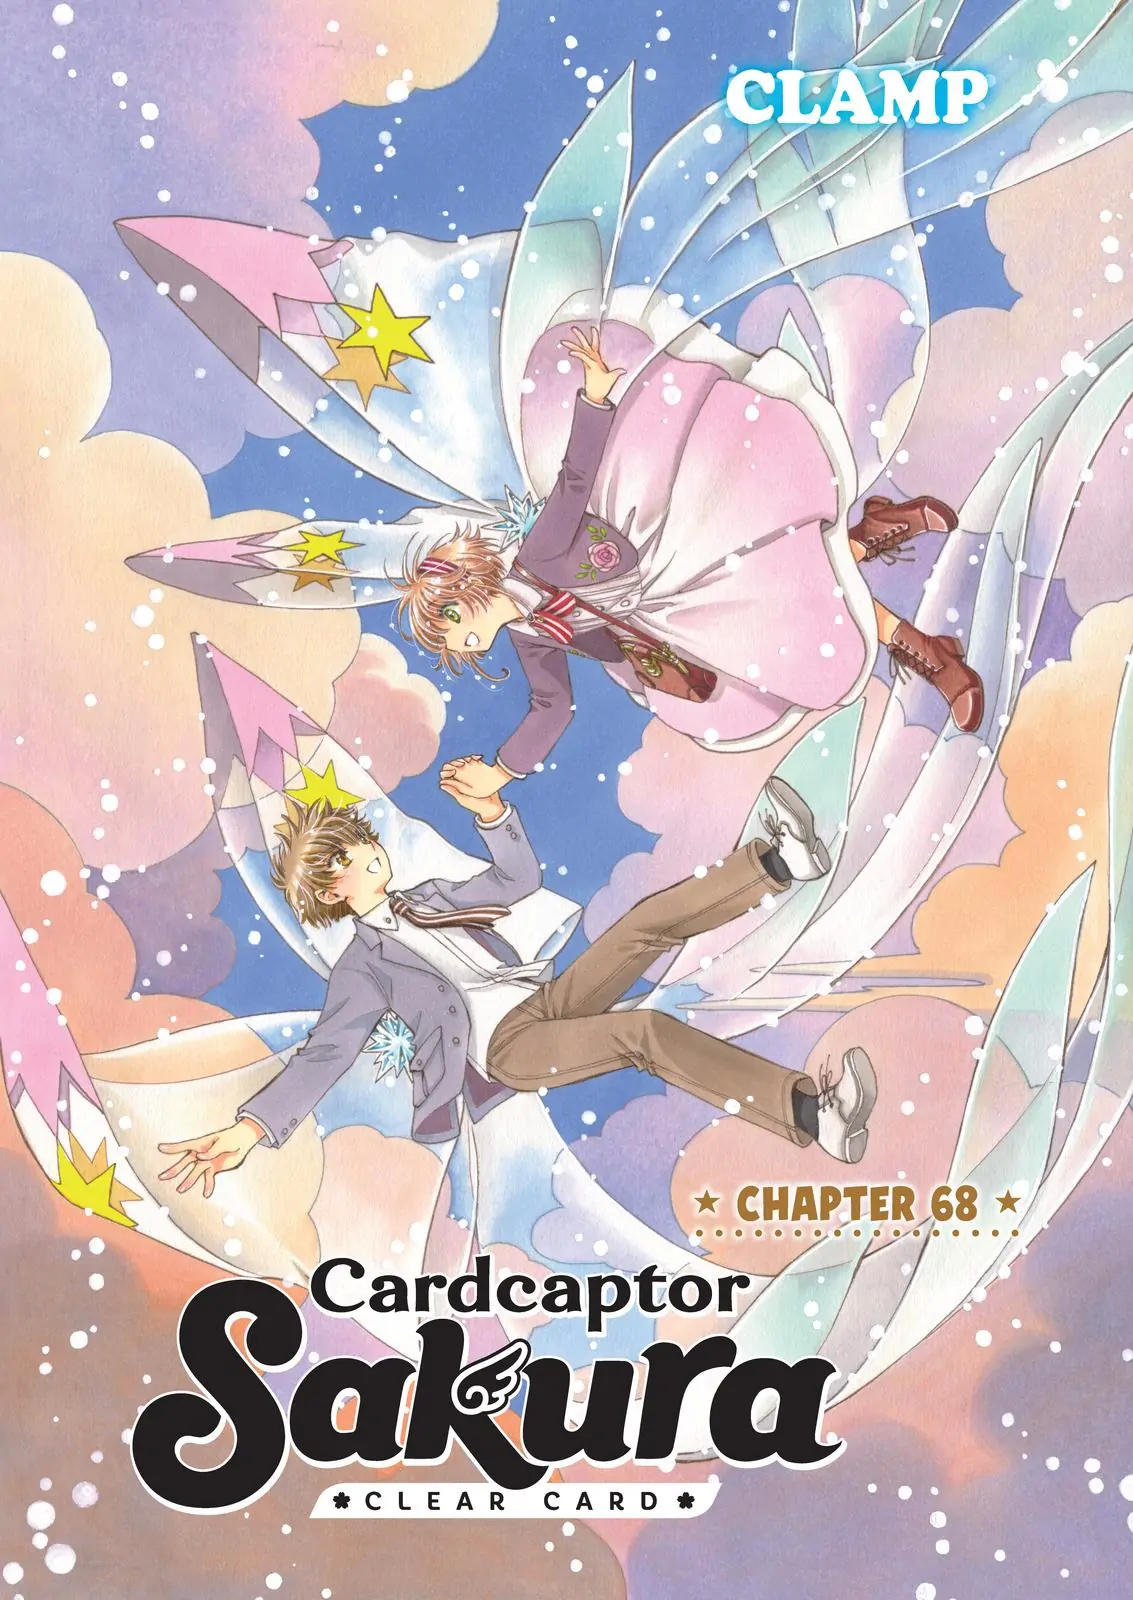 Read Cardcaptor Sakura - Clear Card Arc Chapter 73 on Mangakakalot